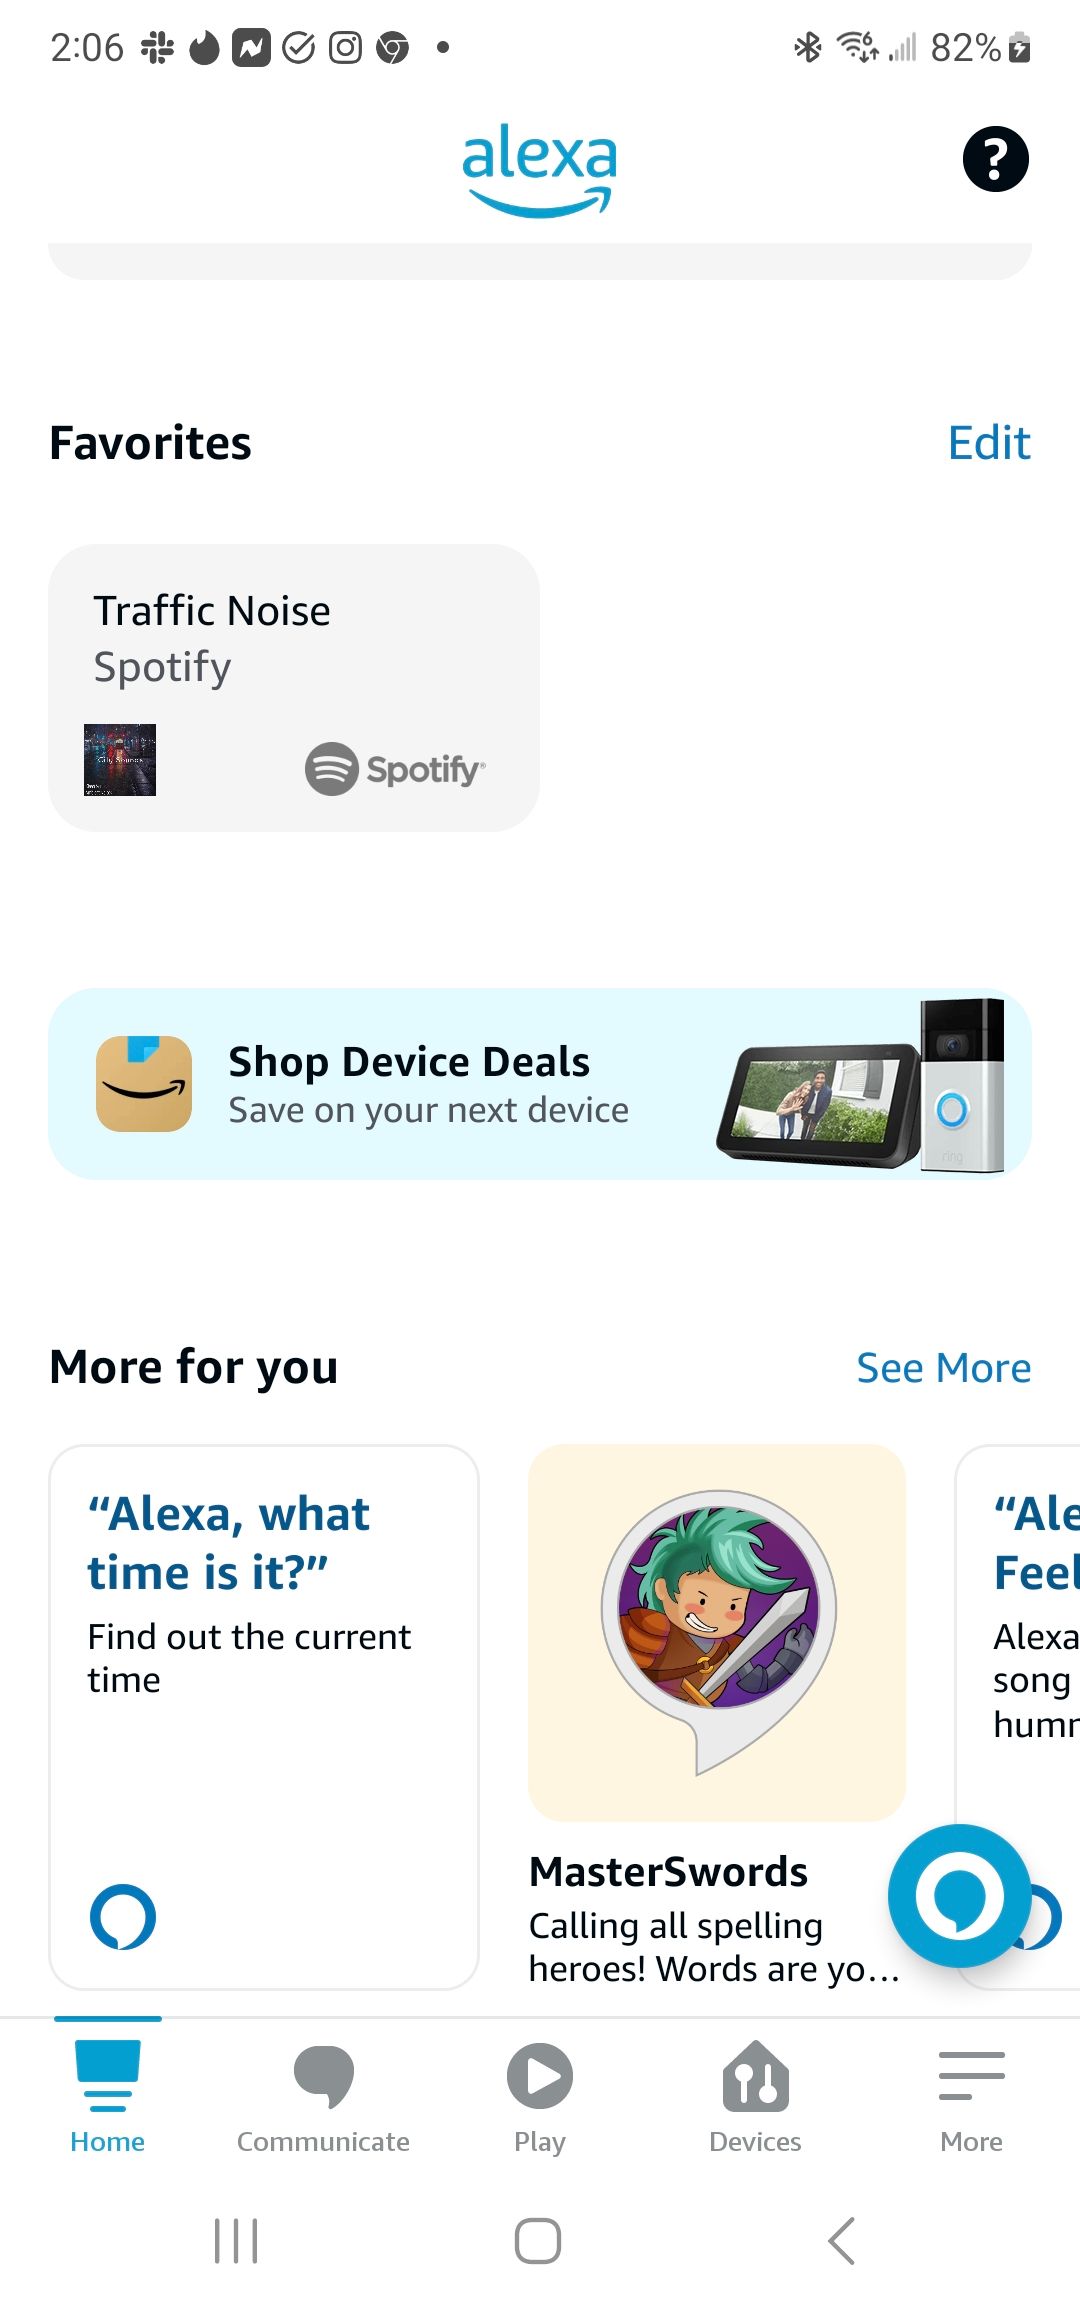 The Amazon Alexa app's home page.